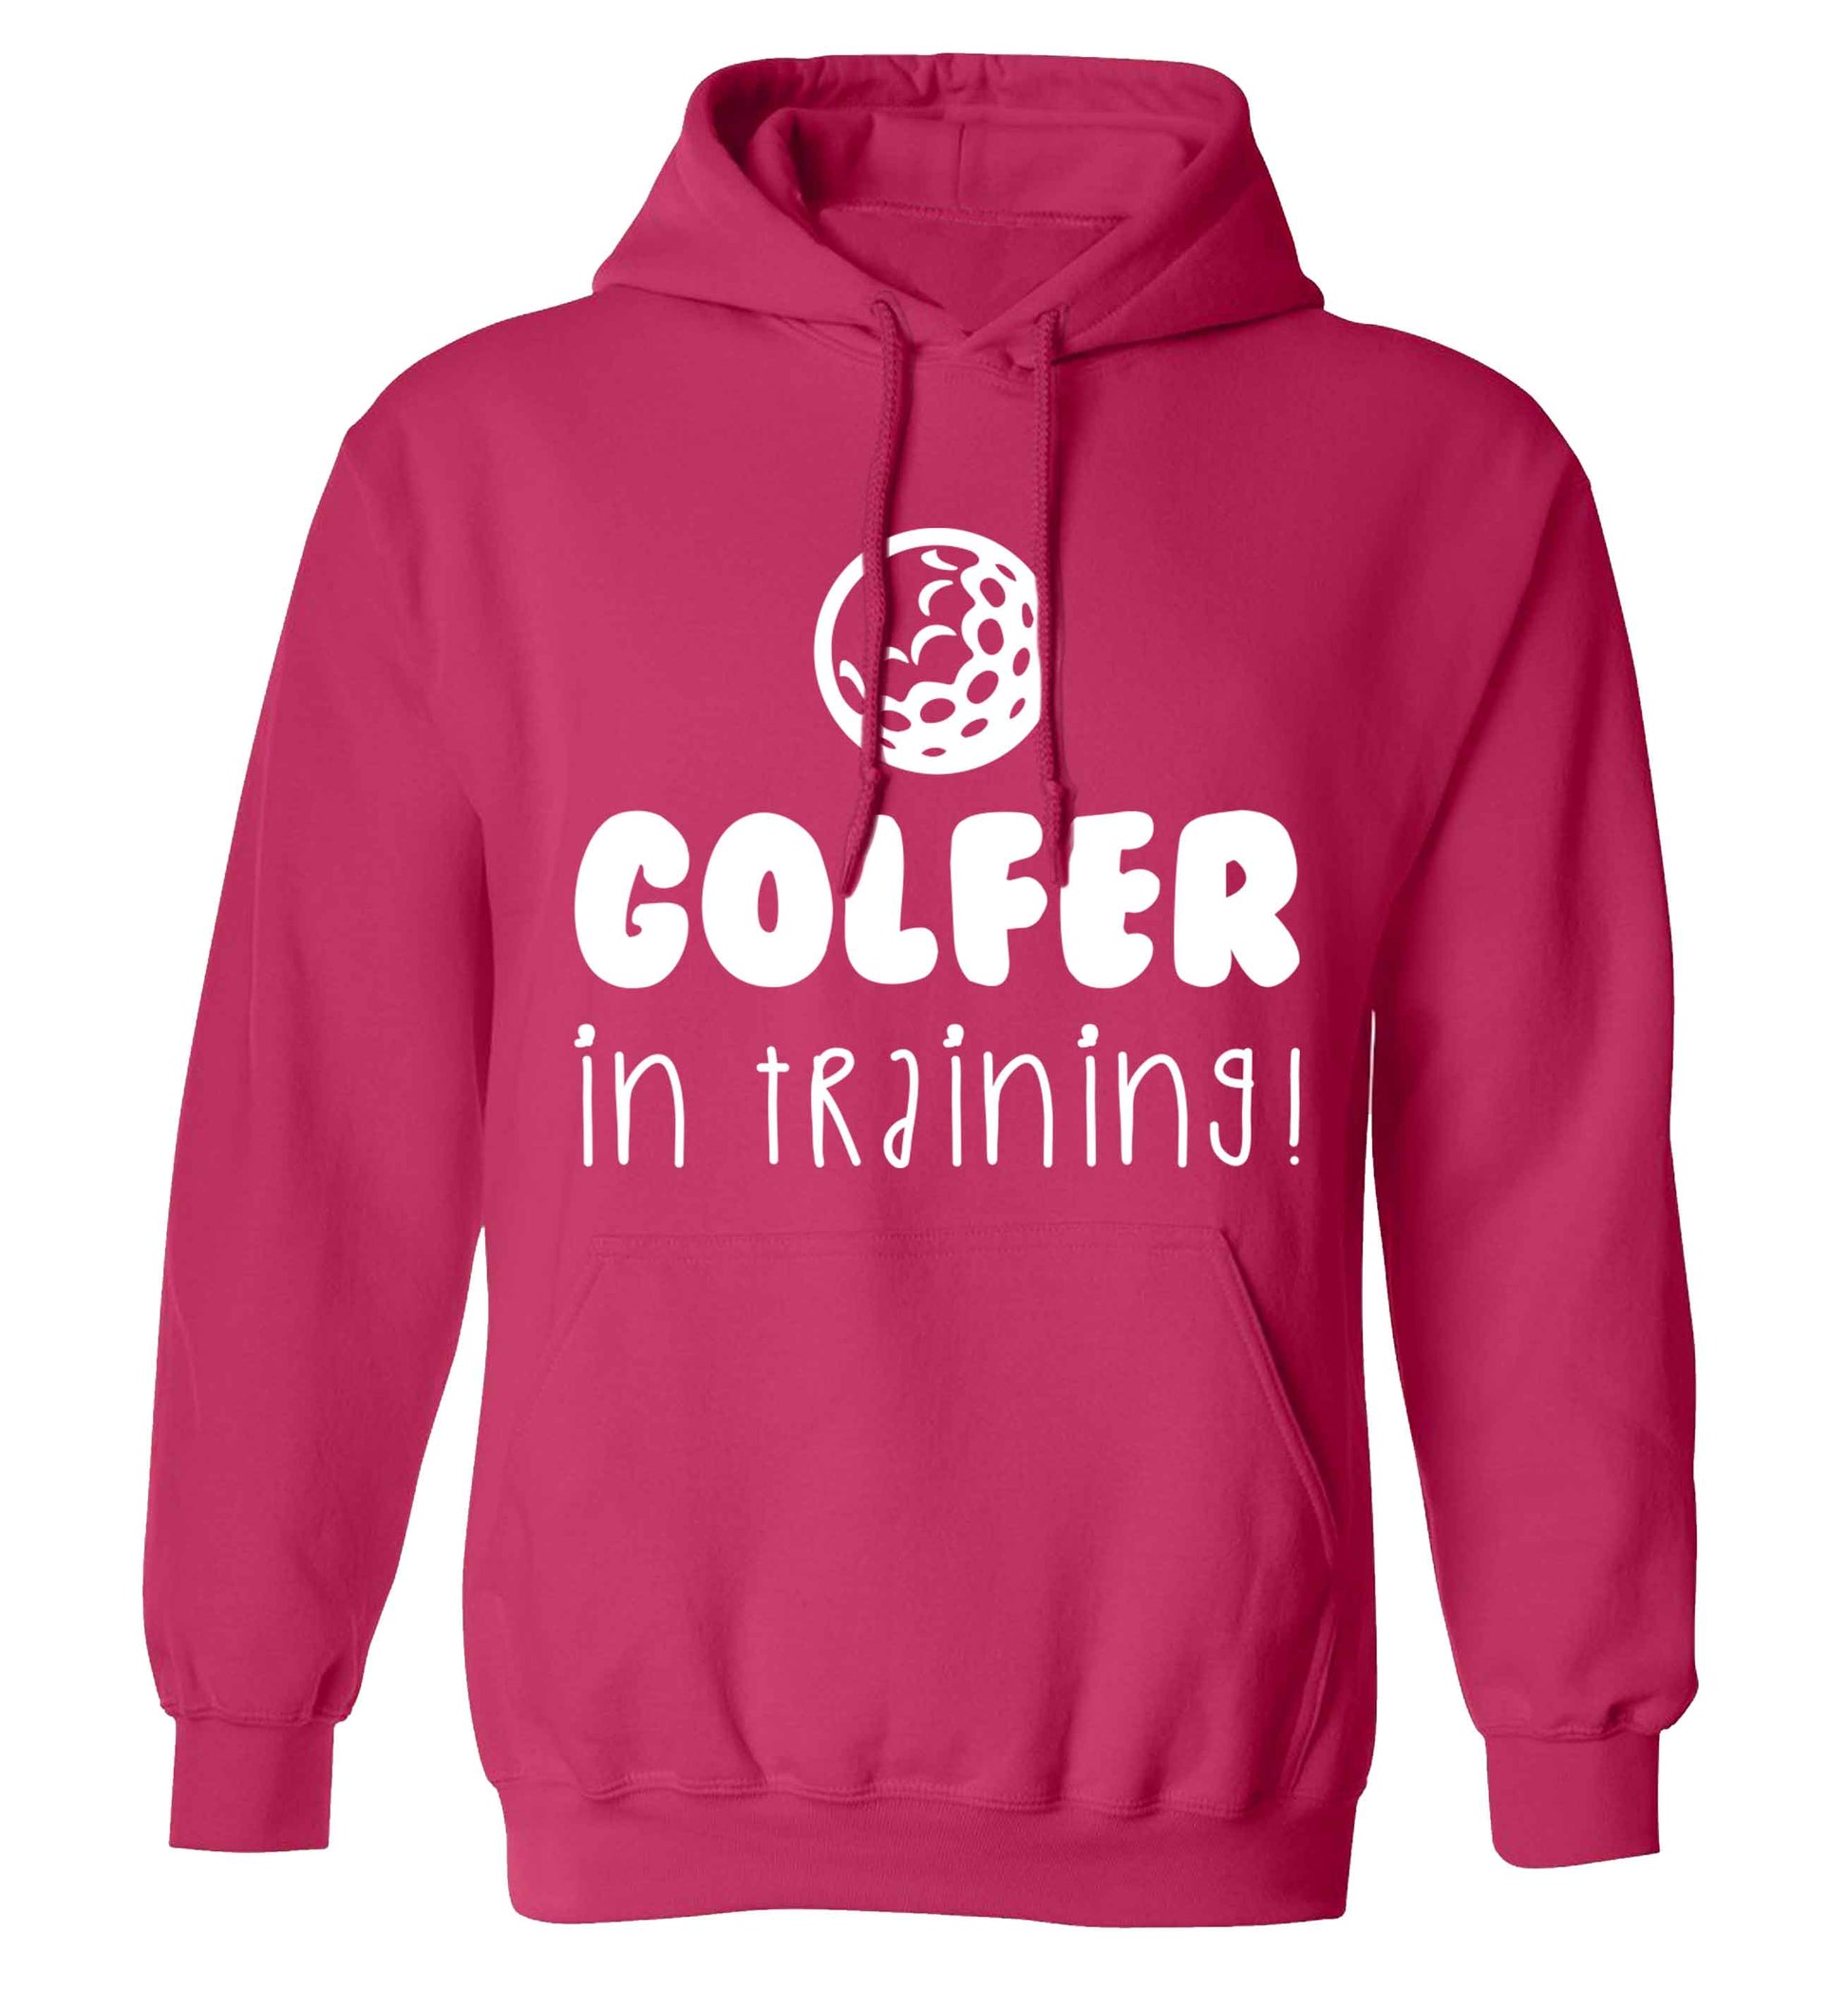 Golfer in training adults unisex pink hoodie 2XL